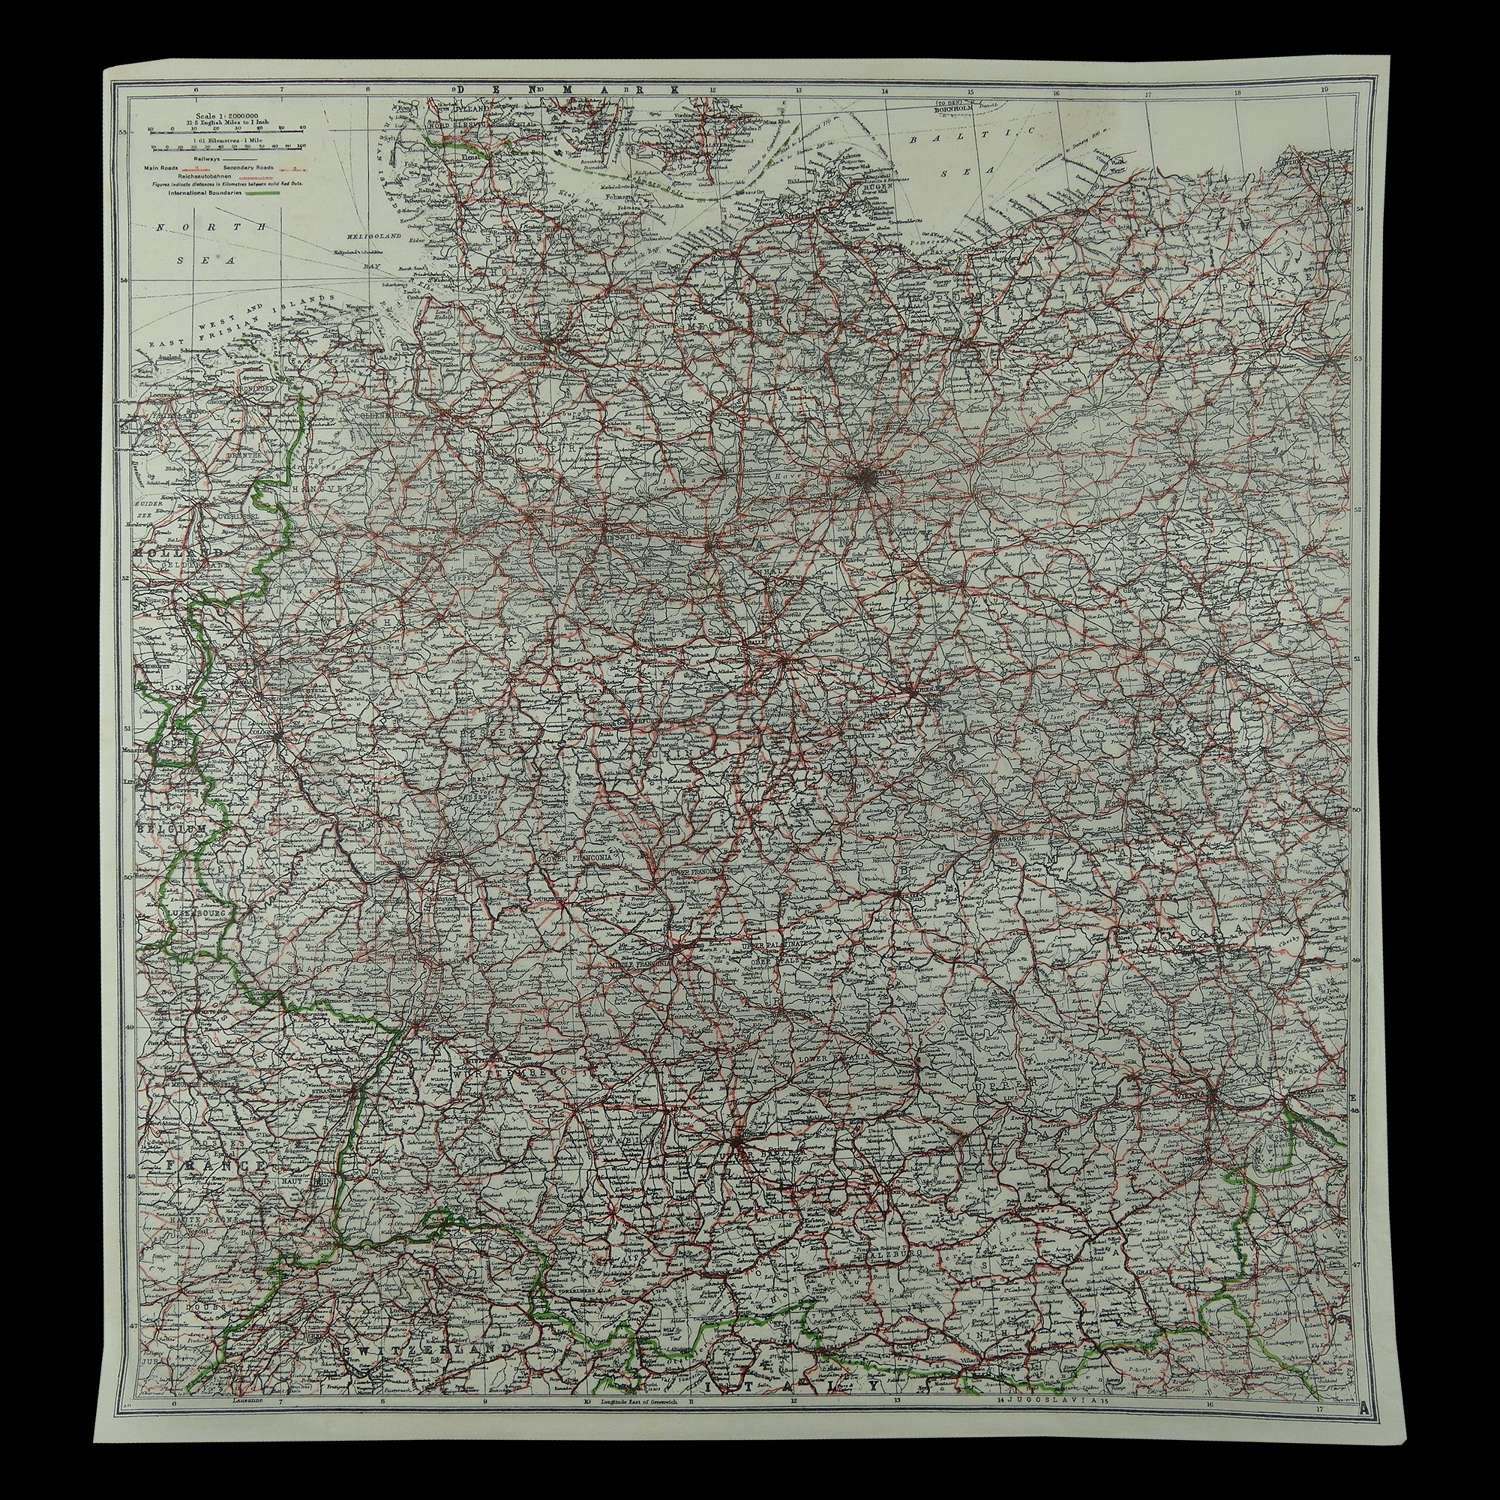 RAF tissue paper escape & evasion map - Germany